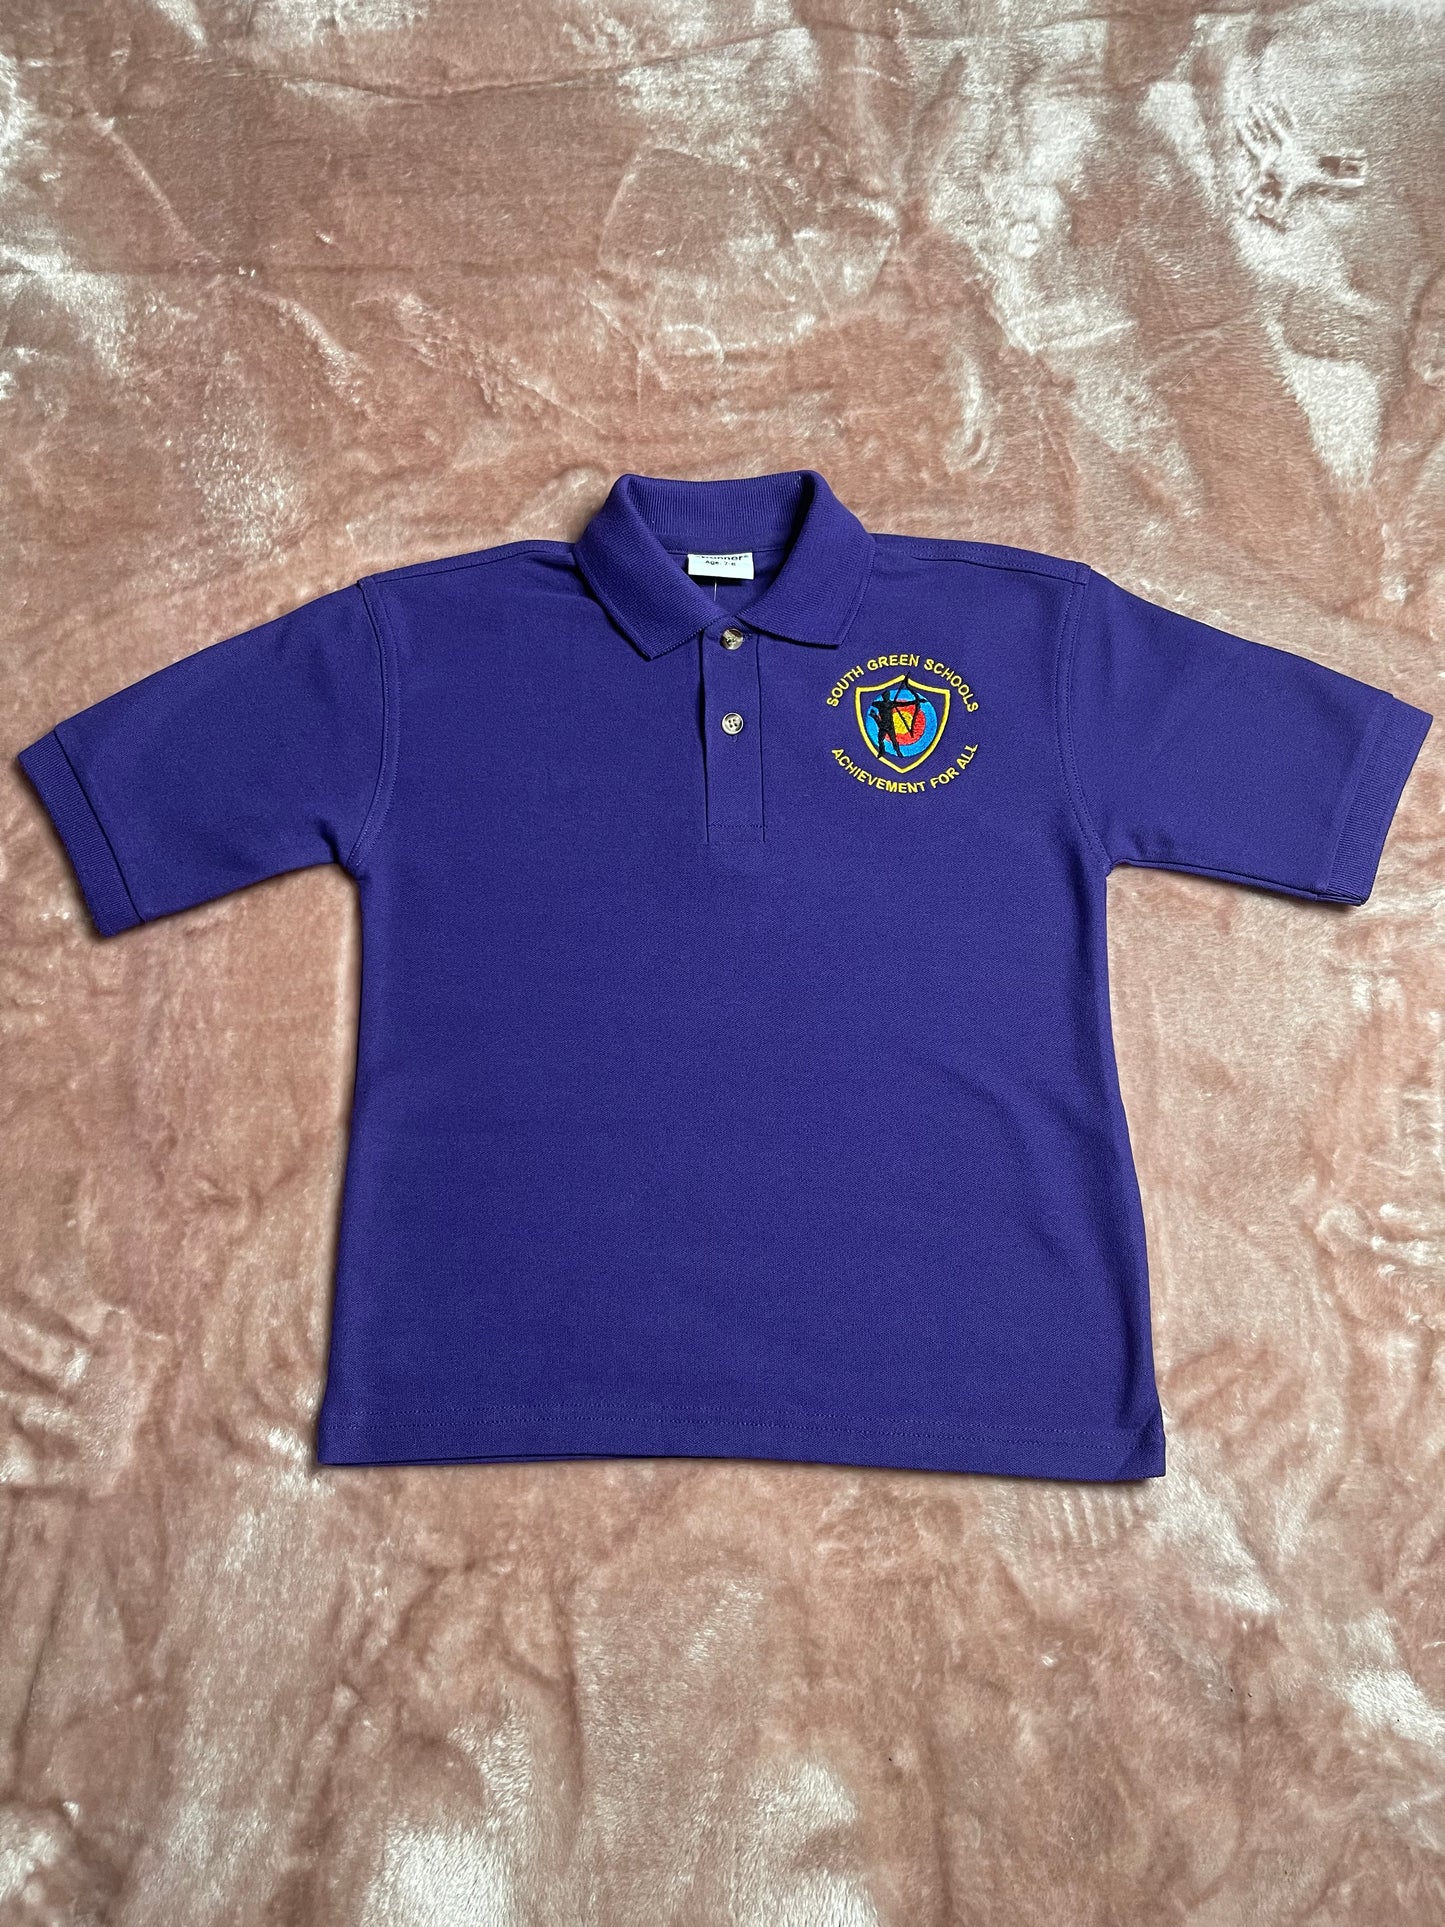 South Green School Polo Shirt